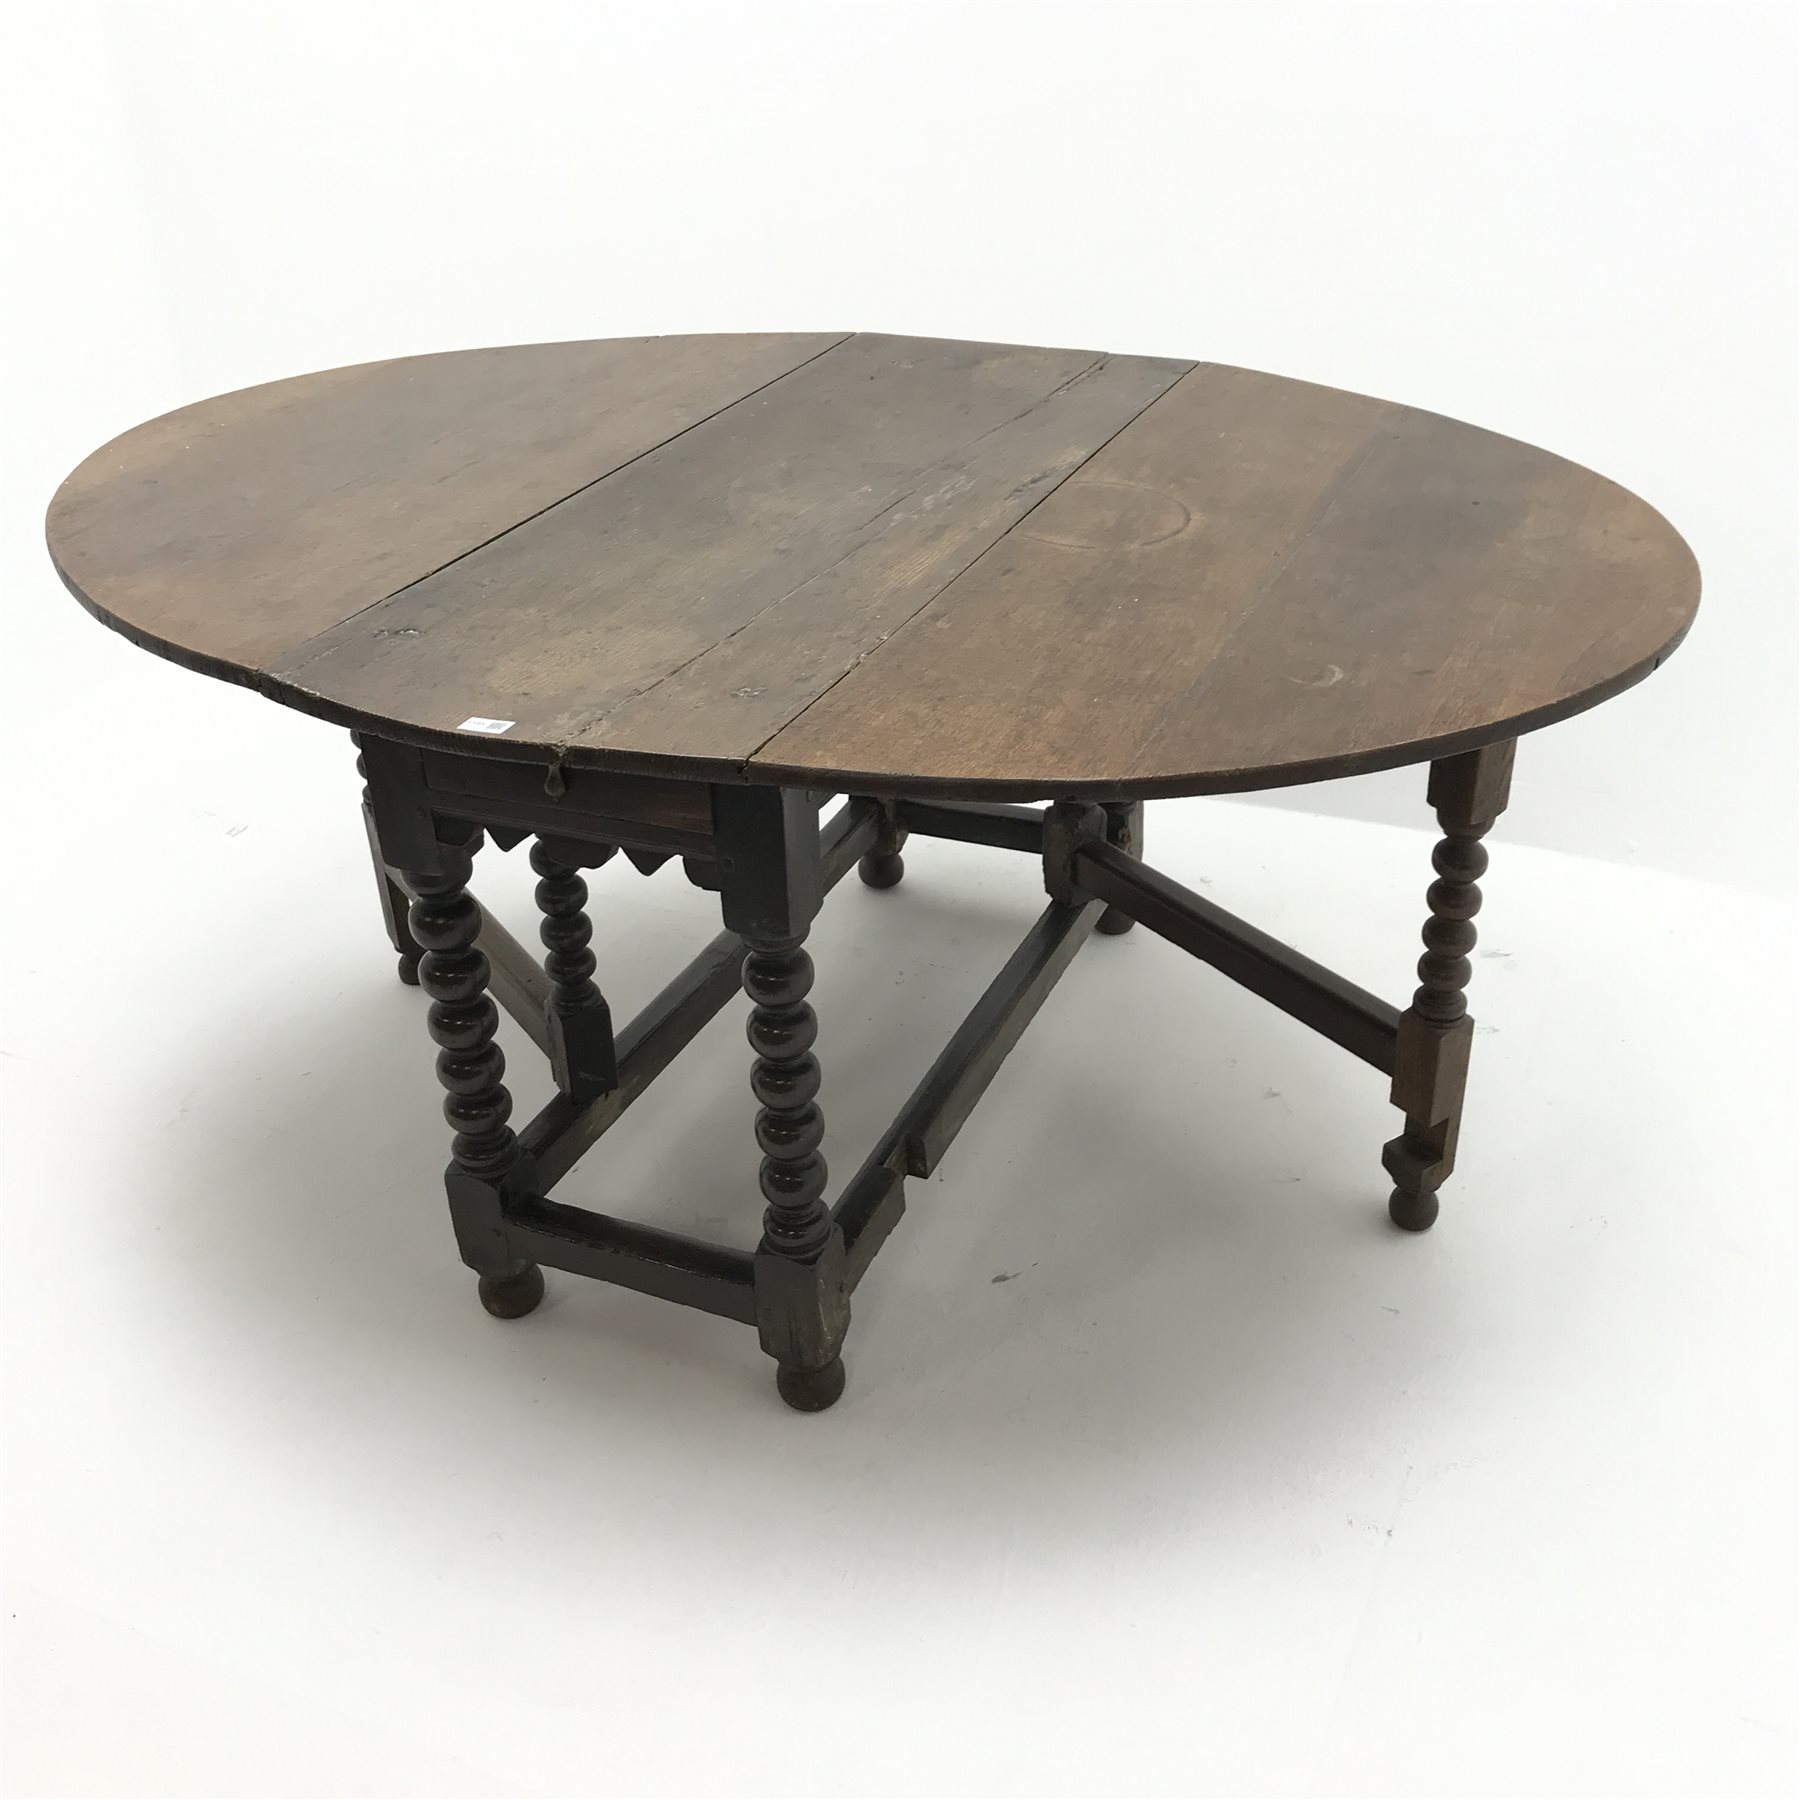 18th century oval oak drop leaf table, bobbin supports, gate leg action, W162cm72cm, D119cm - Image 2 of 8